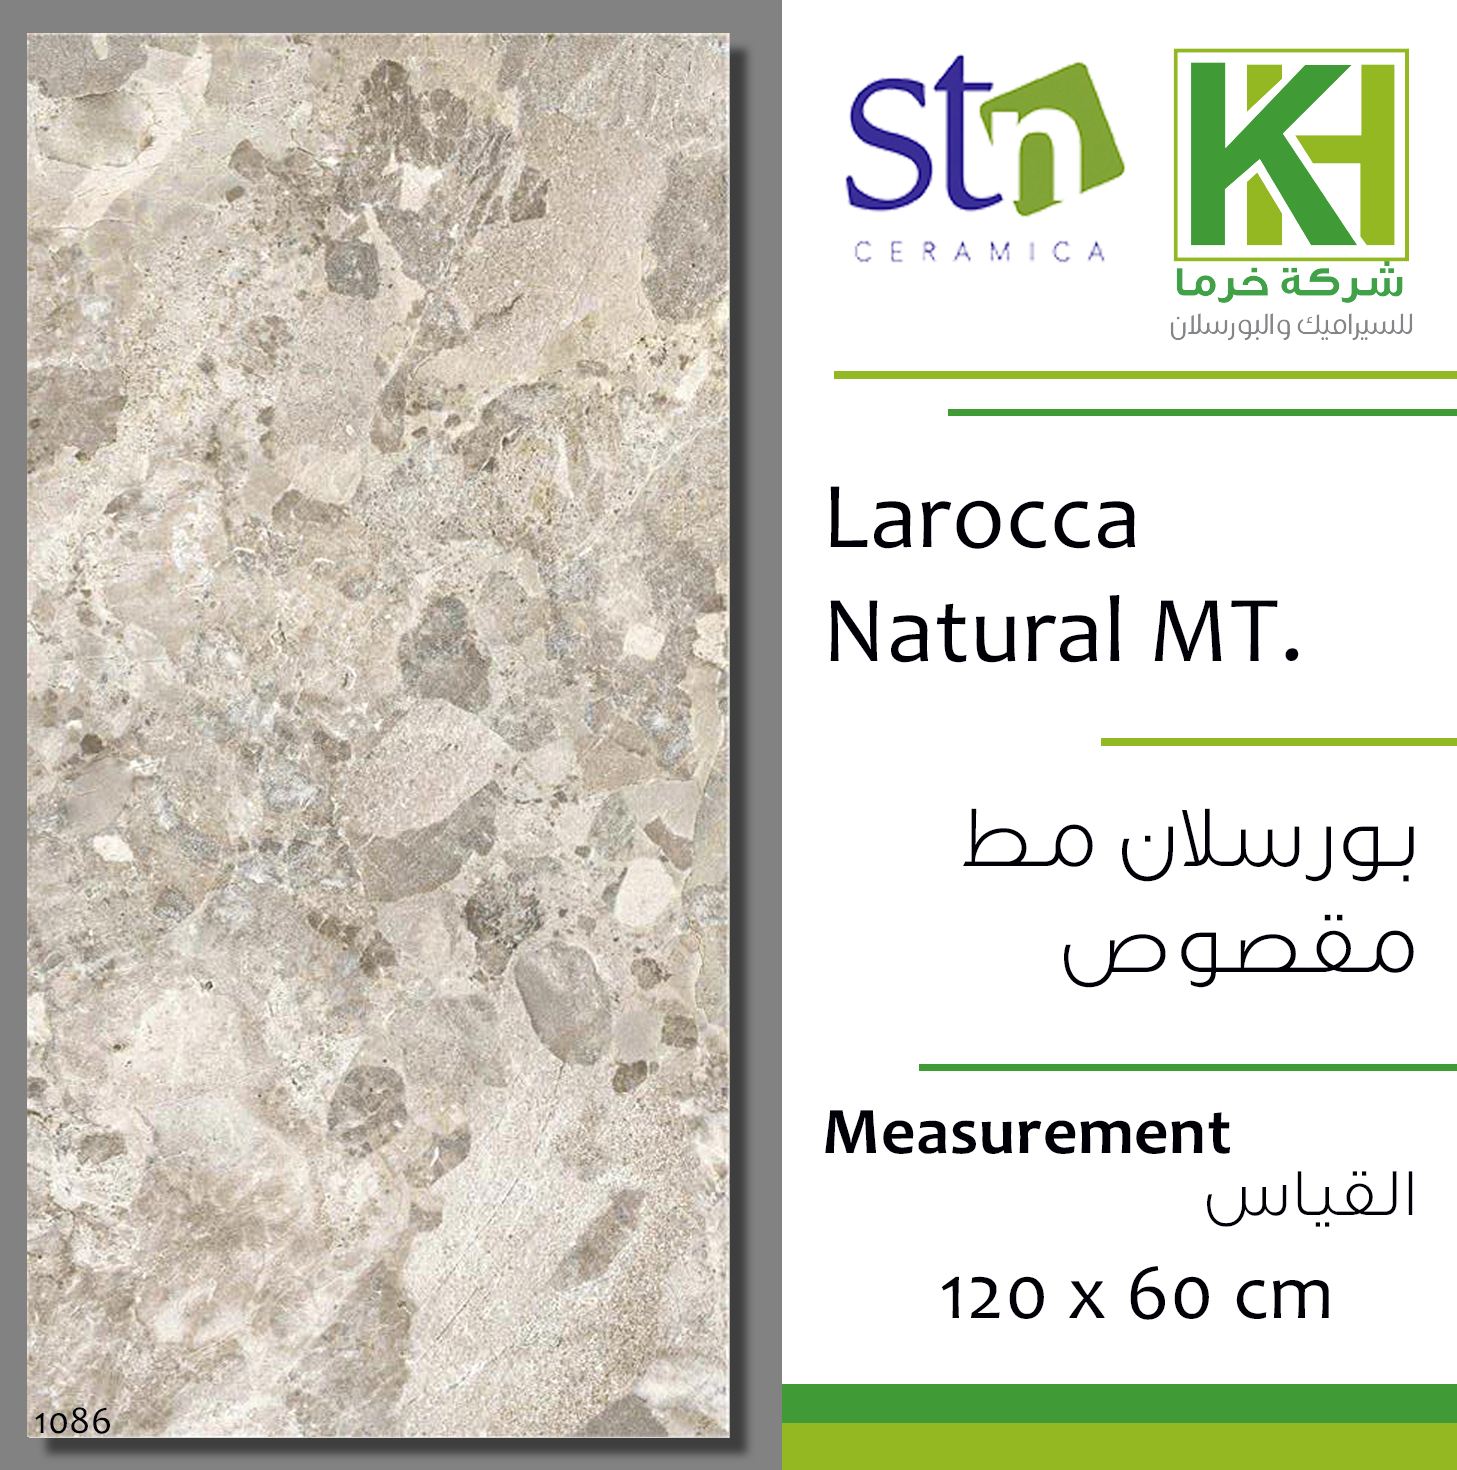 Picture of Spanish Porcelain tile 60x120cm Larocca Natural MT.